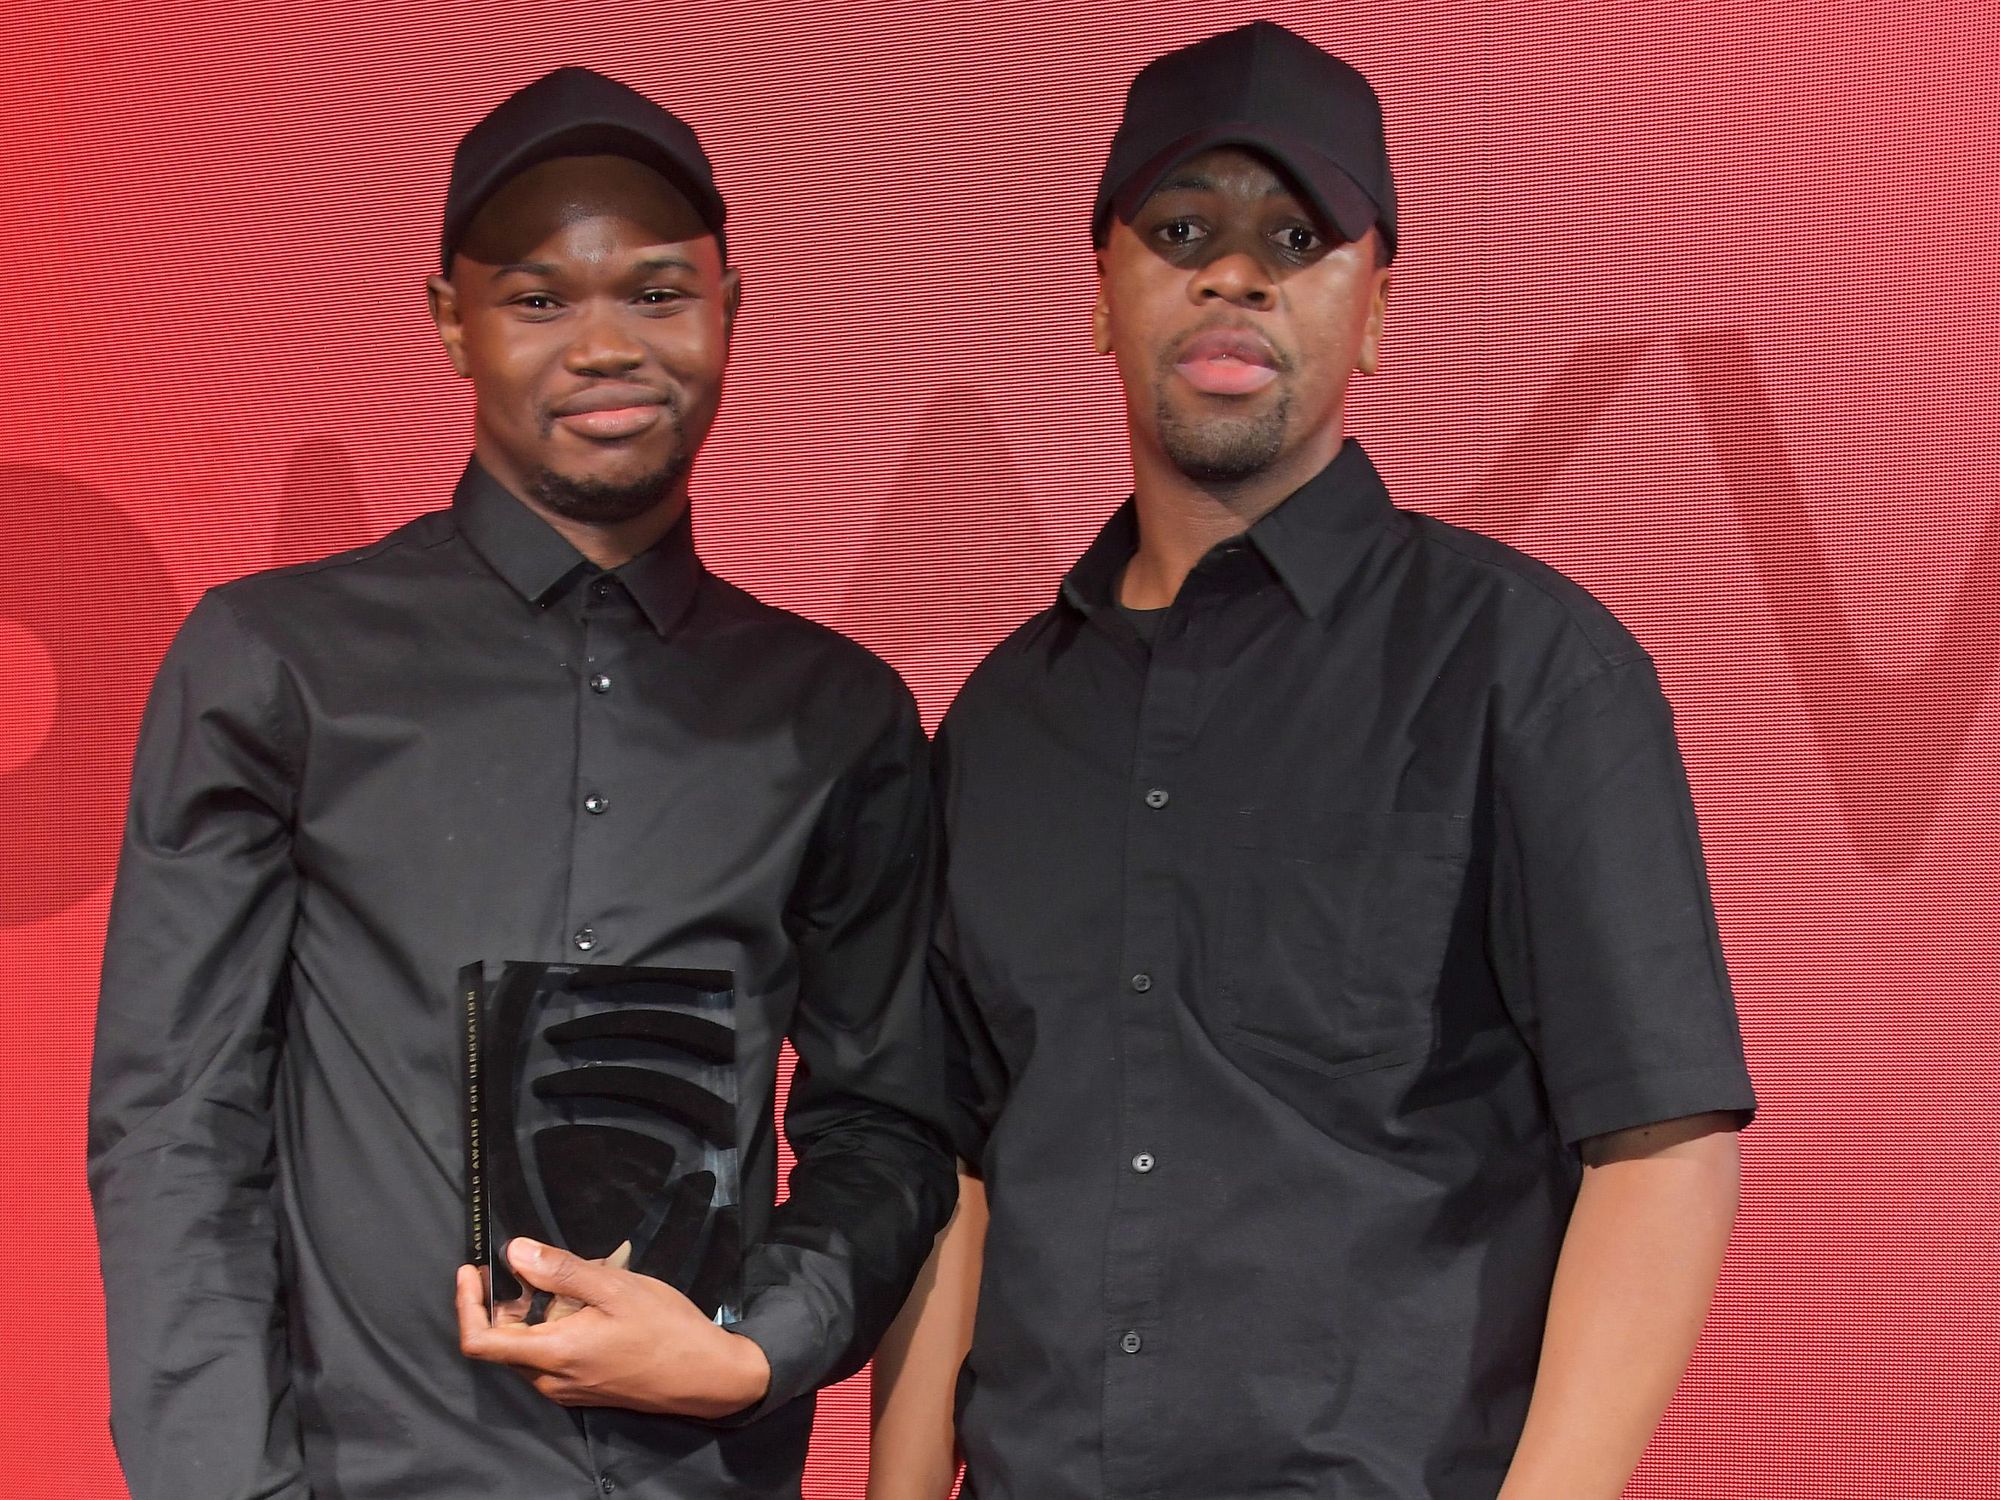 Mmuso Potsane and Maxwell Boko of Mmuso Maxwell wearing all black